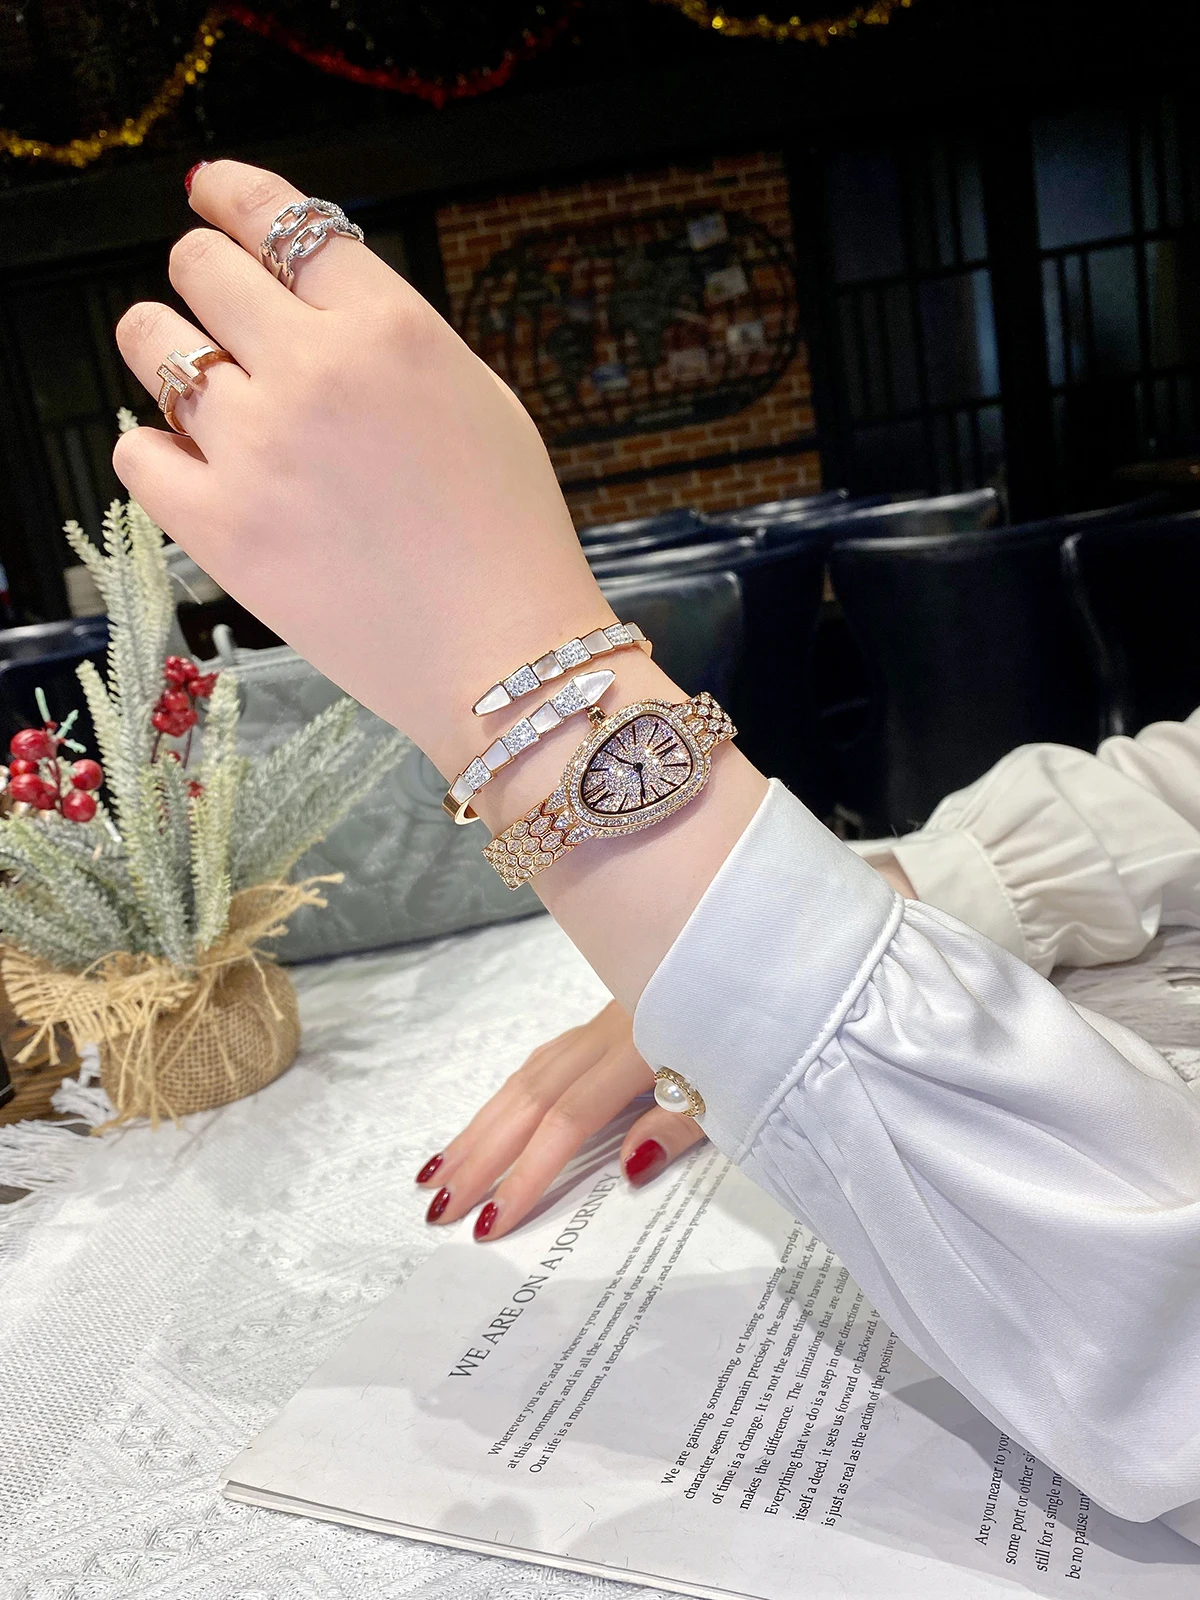 Diamond Women Watches Gold Watch Ladies Wrist Watches Luxury Brand Rhinestone Women's Bracelet Watches Female enlarge